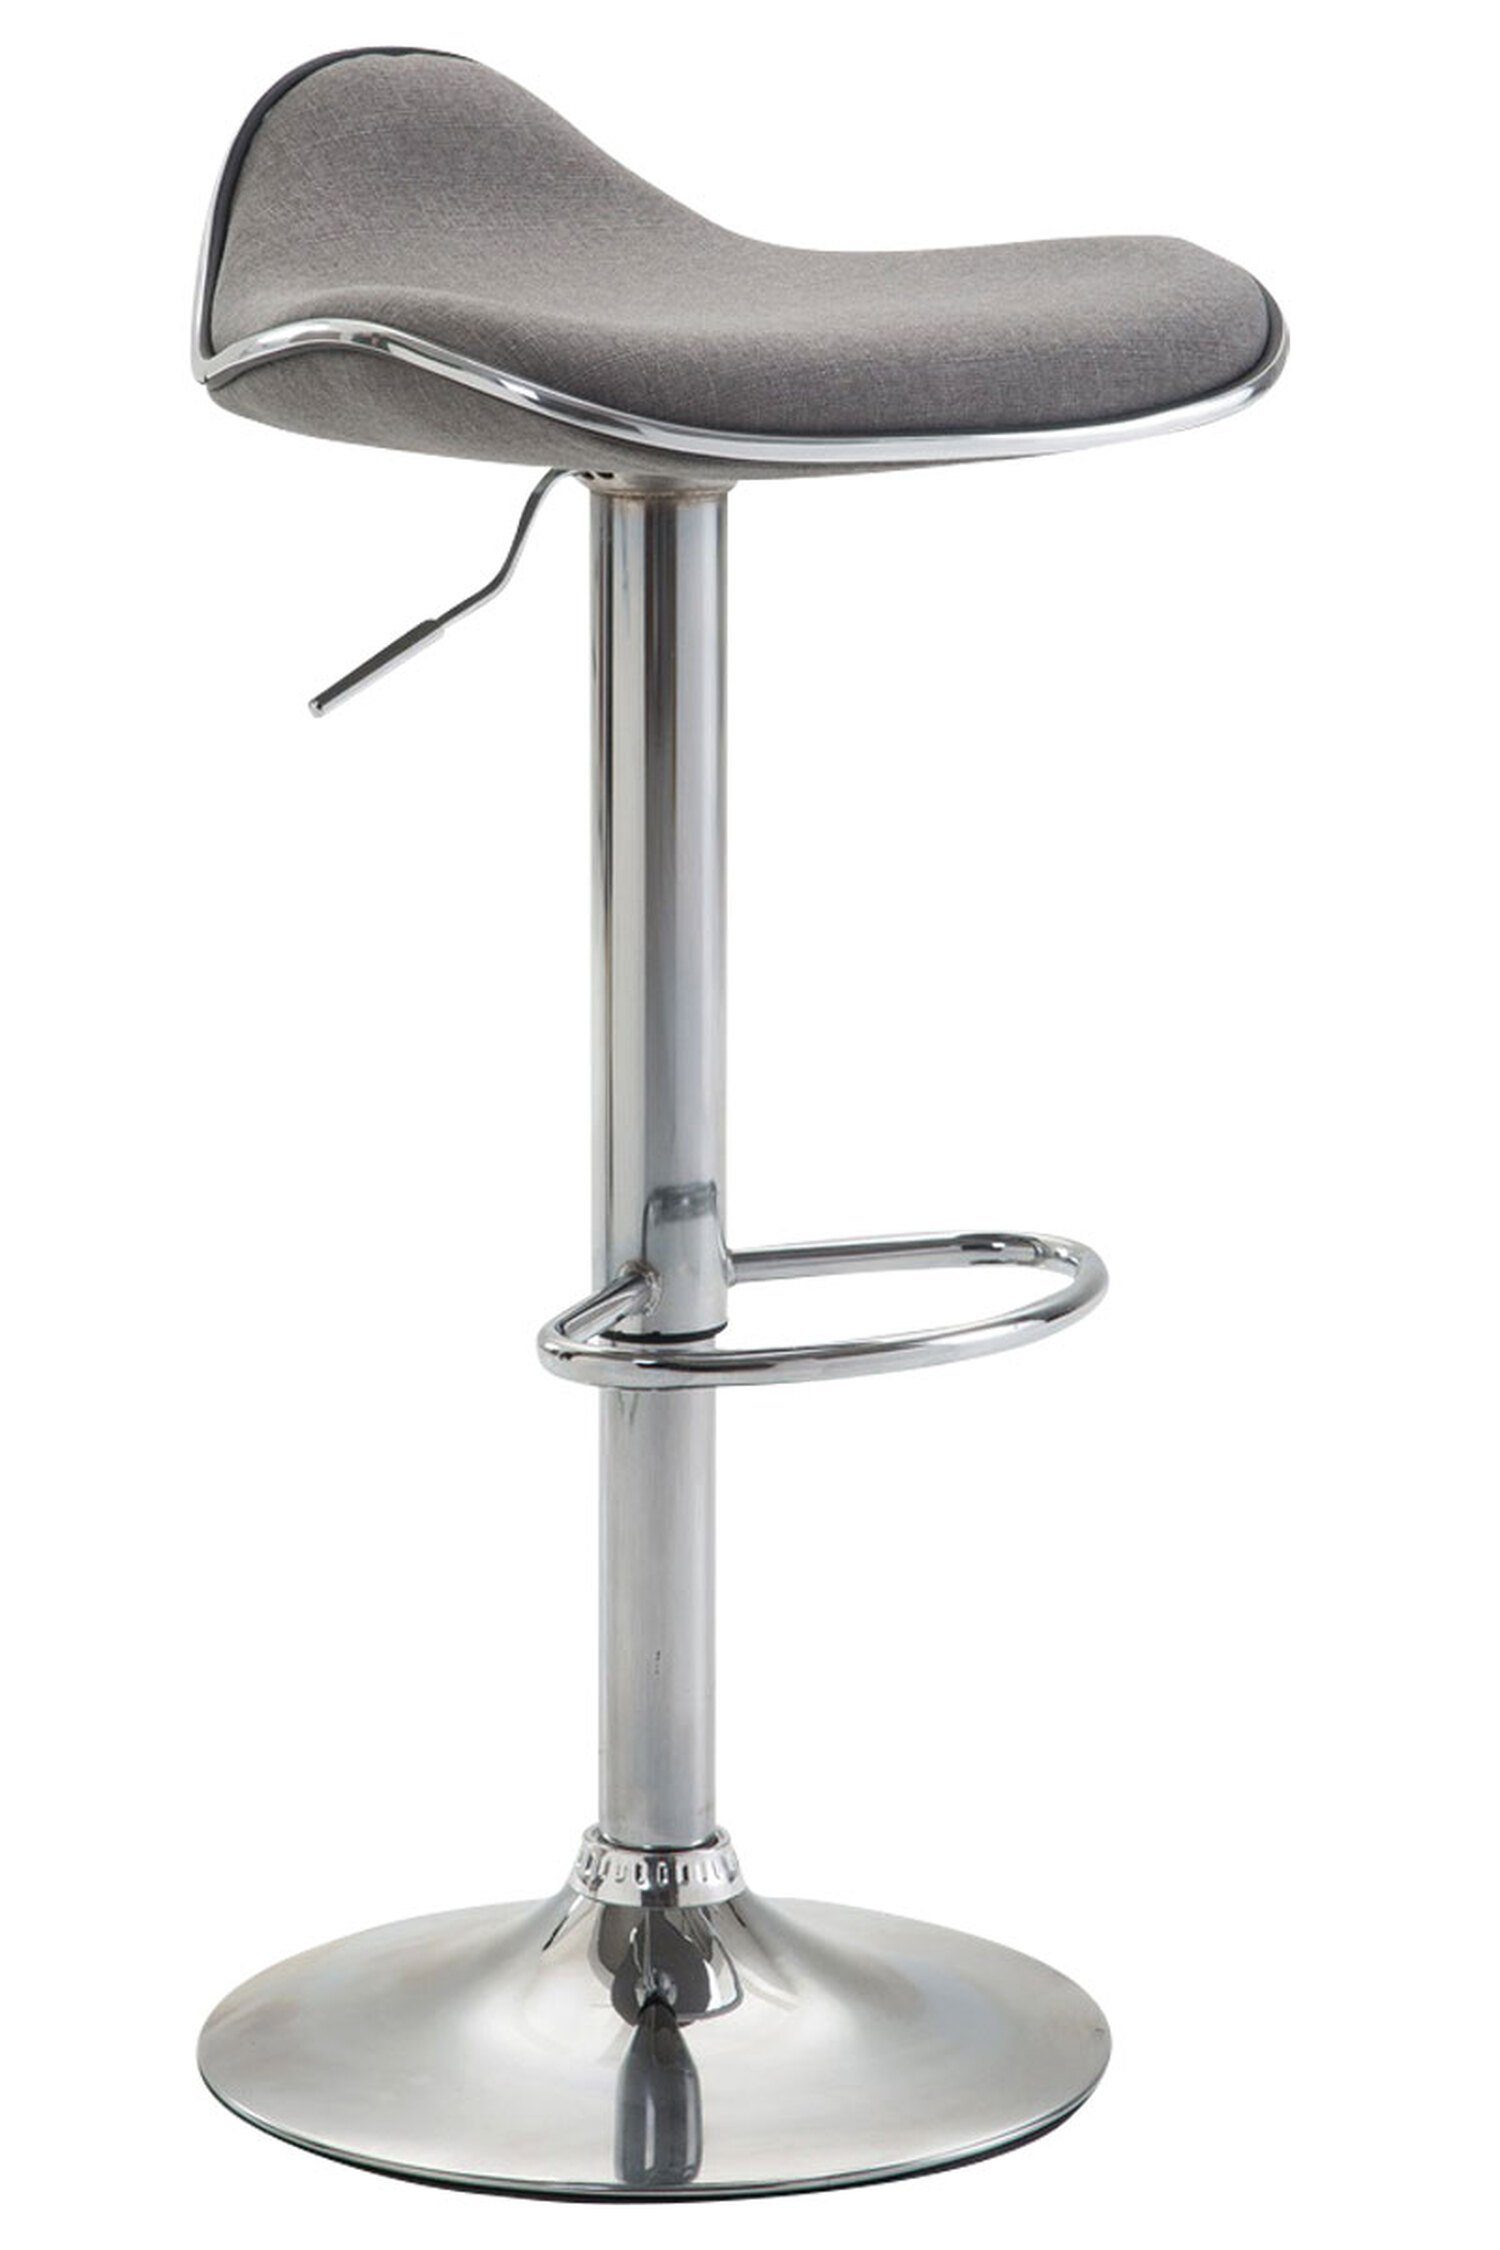 TPFLiving Barhocker Shangrila (Barstuhl höhenverstellbar - Hocker für Theke & Küche - Tresenhocker), 360° drehbar - chromfarbener Stahl - Sitzfläche: Stoff Hellgrau